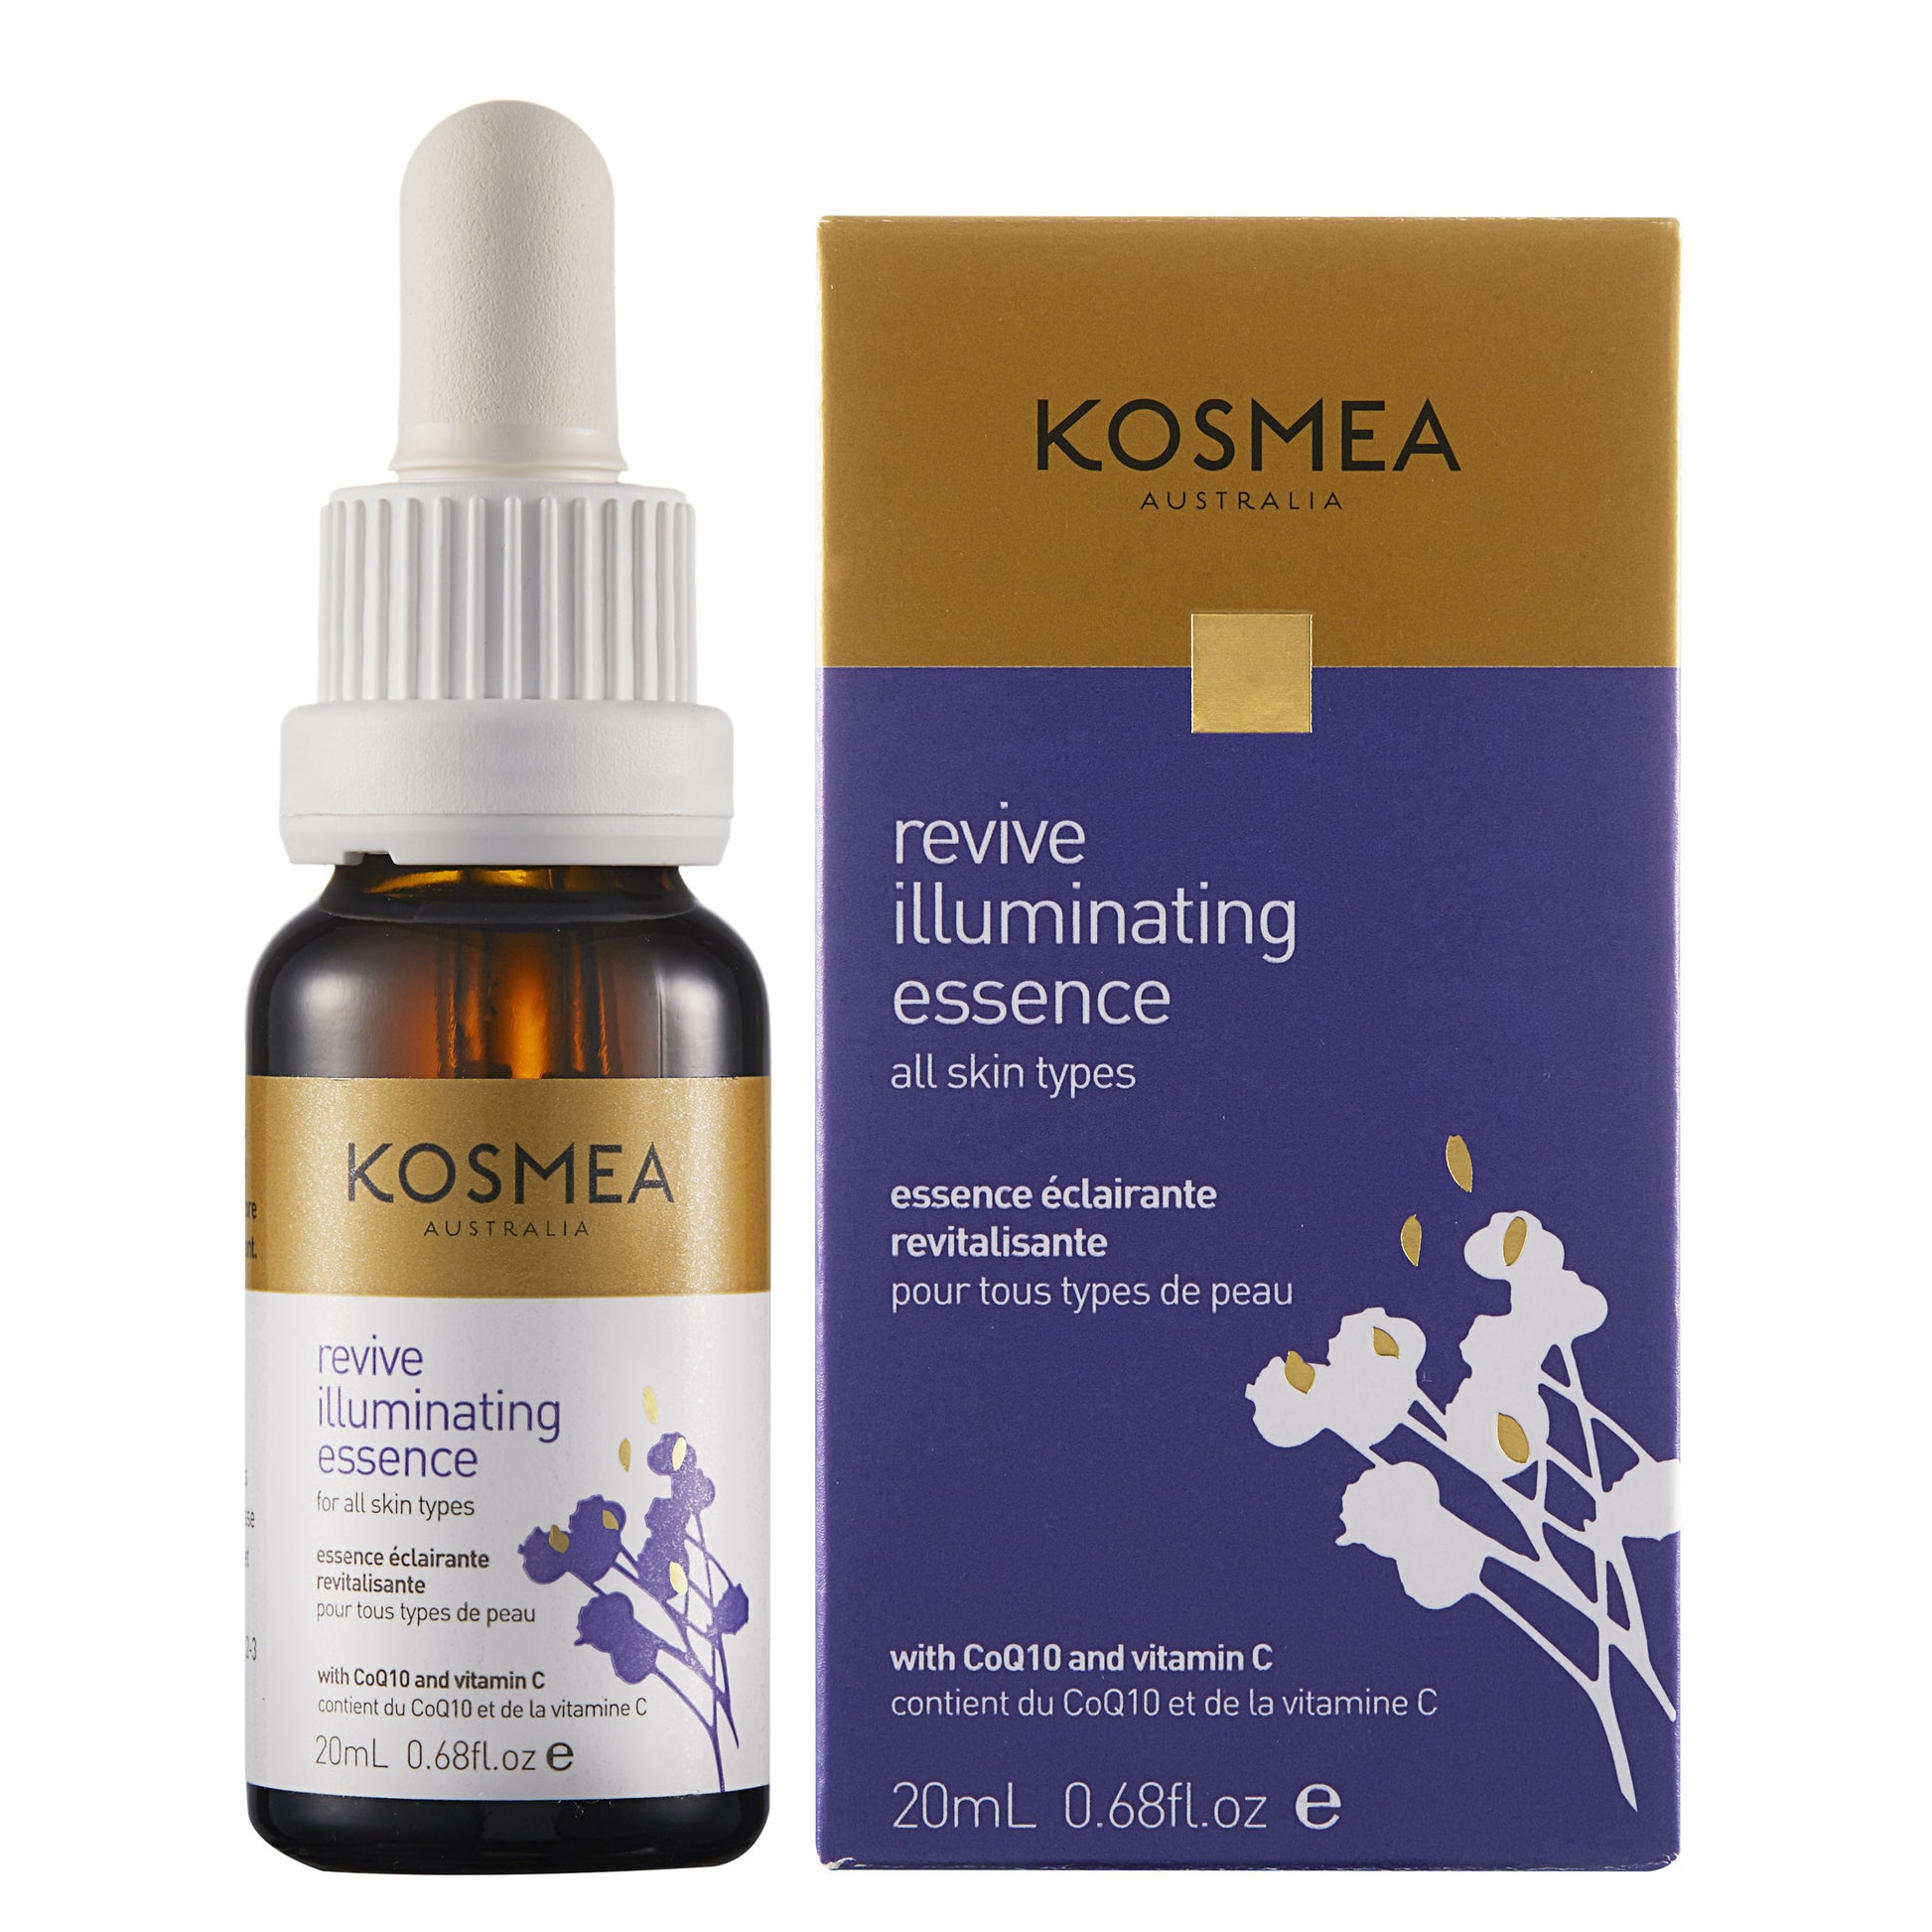 Kosmea Australia Revive Illuminating Essence 20ml now available in USA